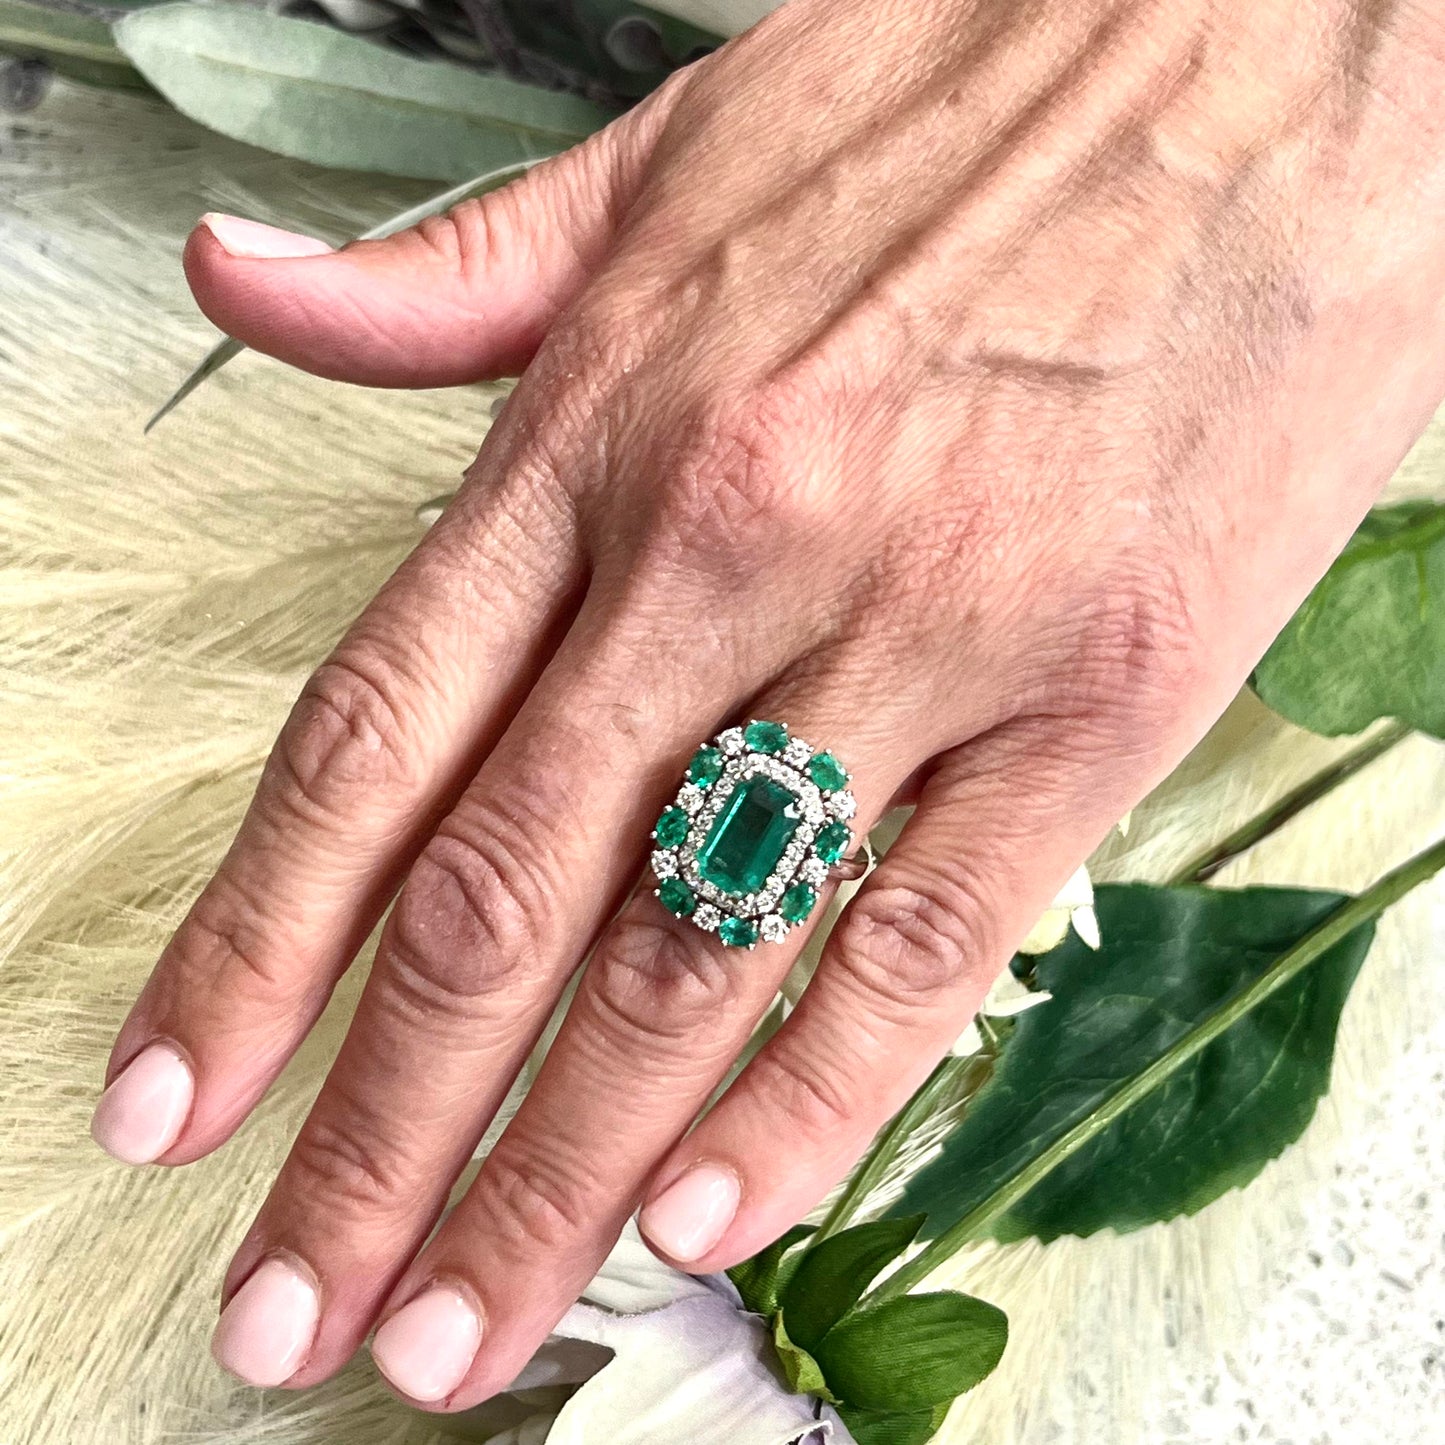 Natural Emerald Diamond Ring 6.5 14k Gold 4.52 TCW GIA Certified $12,950 210738